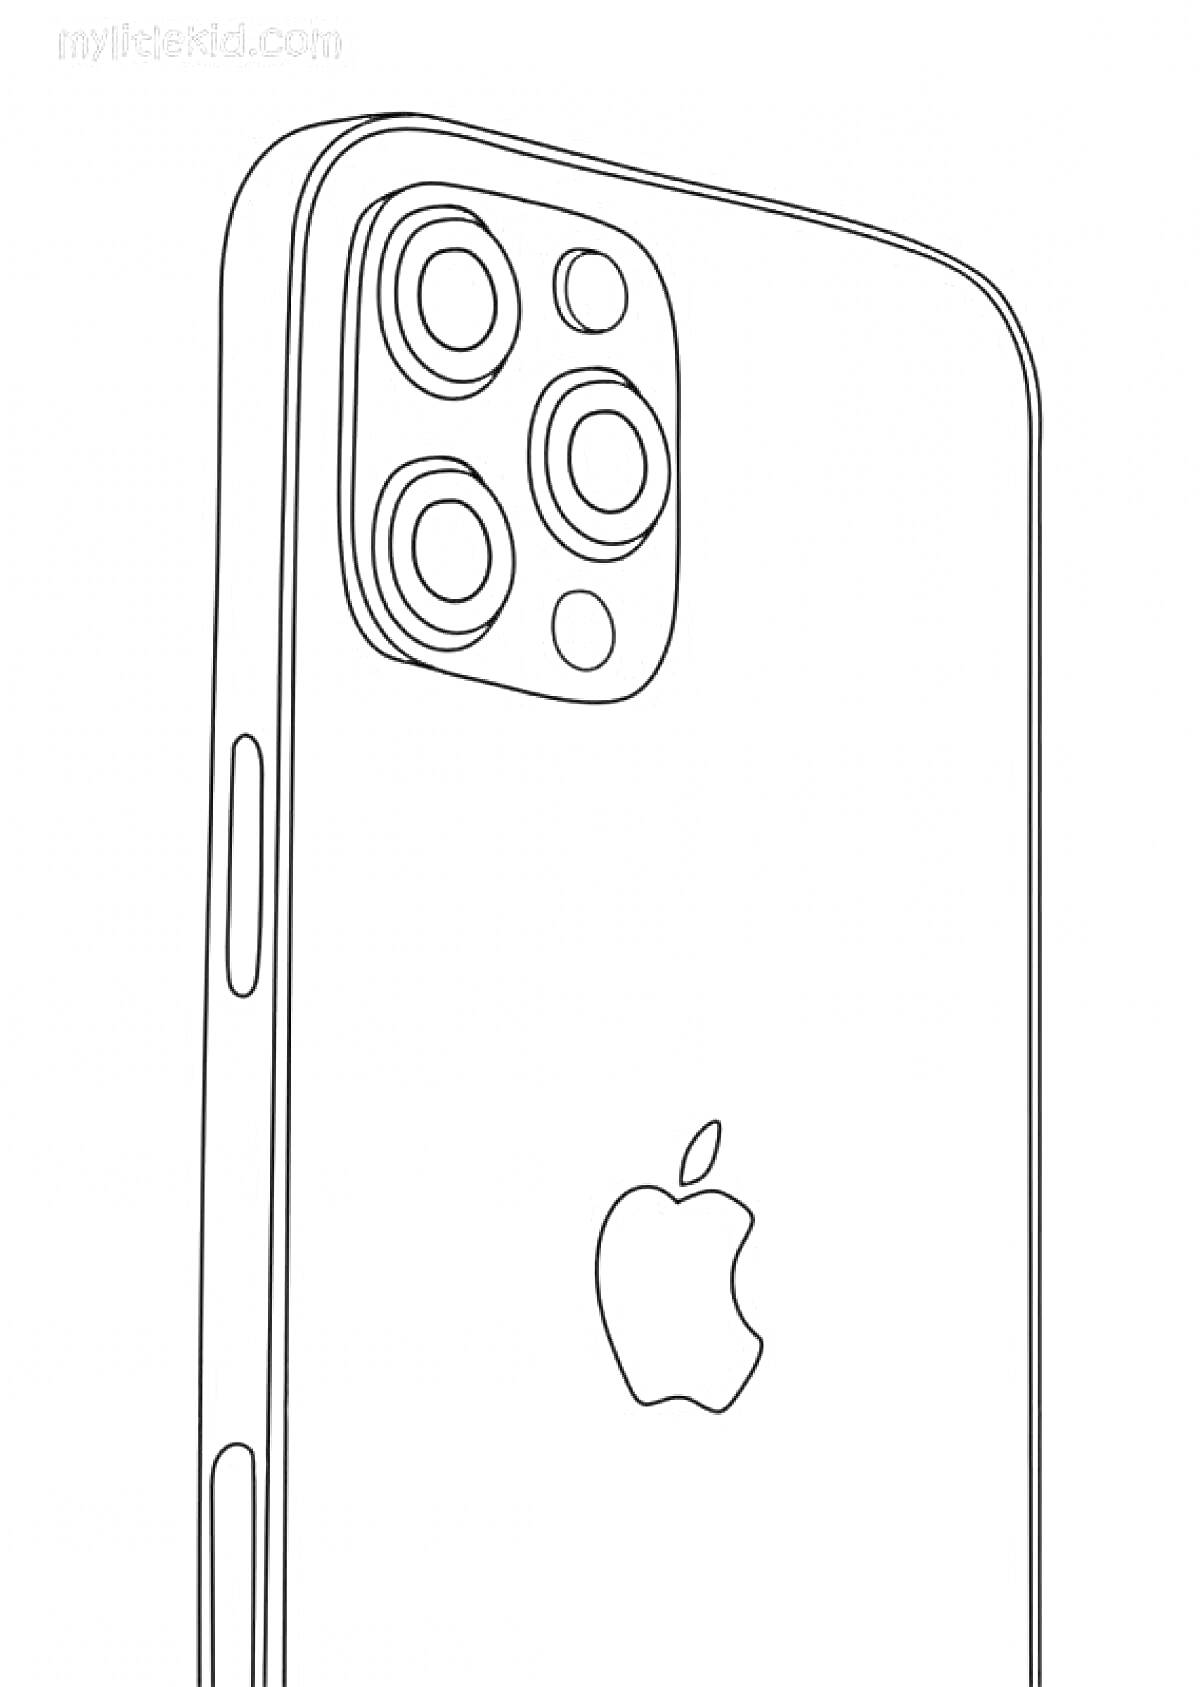 Раскраска iPhone 14 с логотипом Apple и тремя камерами